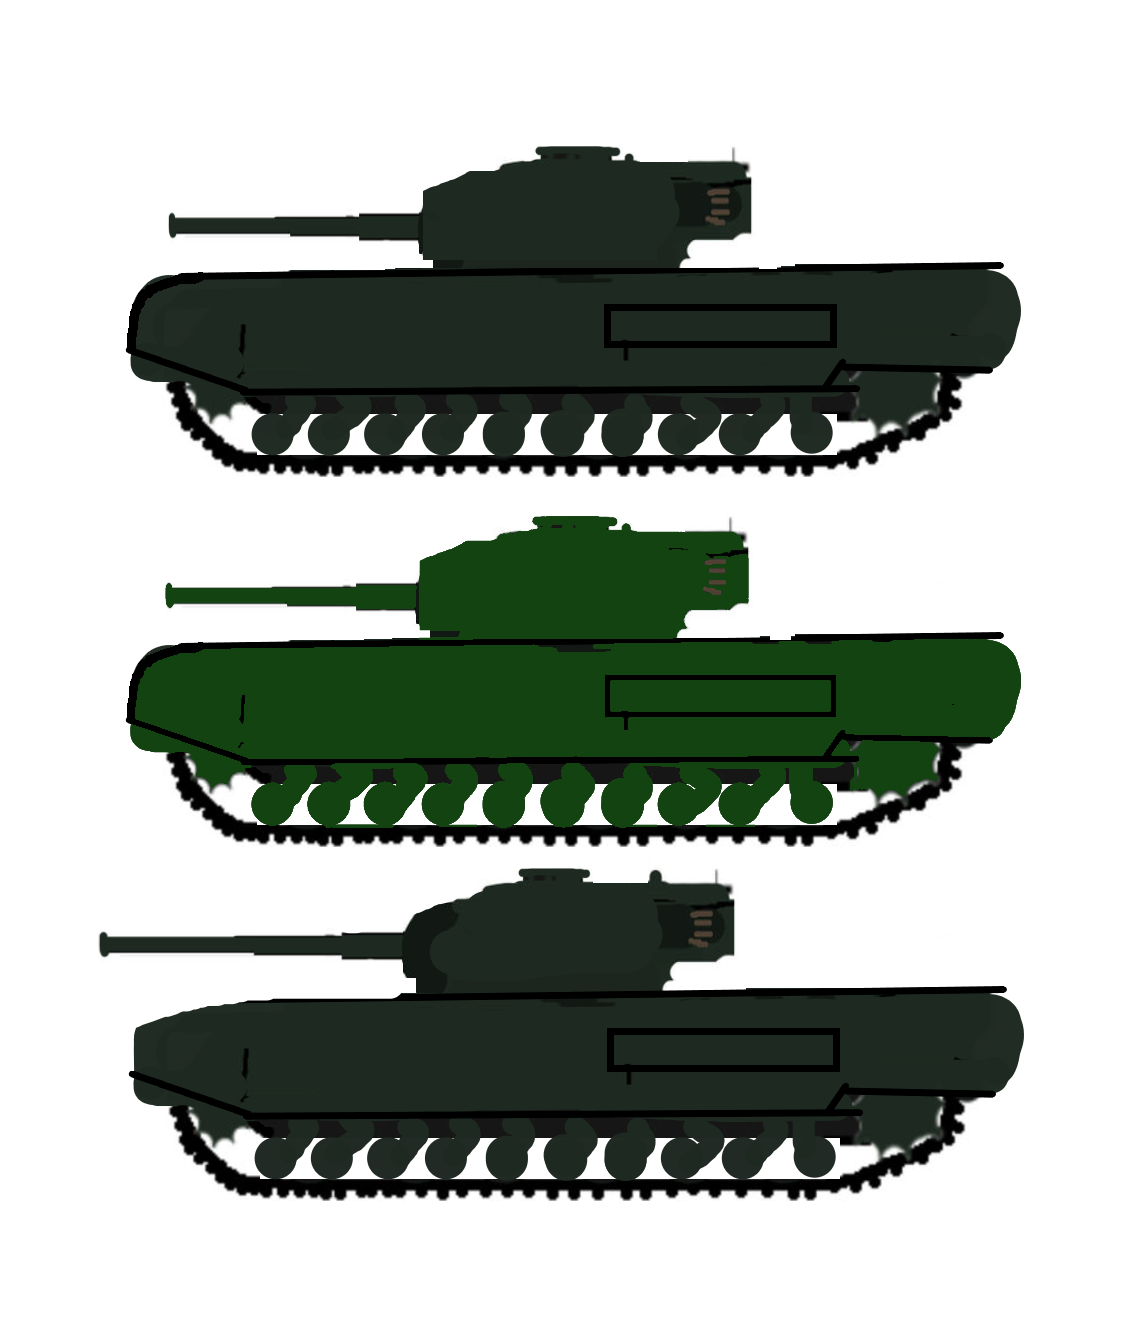 Churchill Mk. VII and Black Prince by Konigstiger69 on DeviantArt